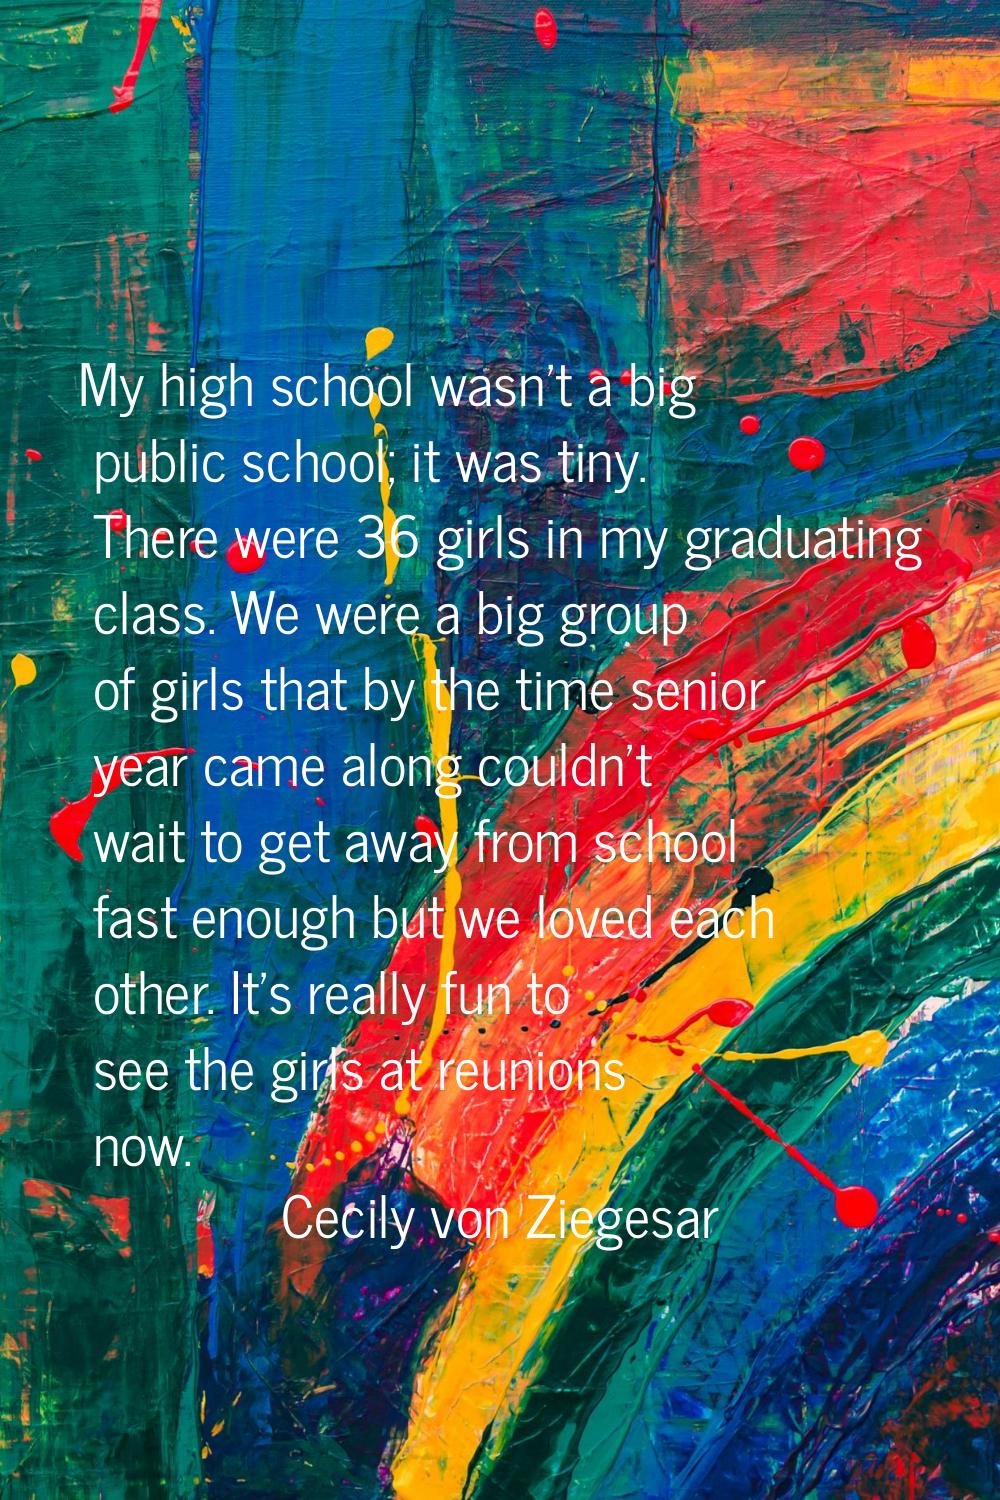 My high school wasn't a big public school; it was tiny. There were 36 girls in my graduating class.